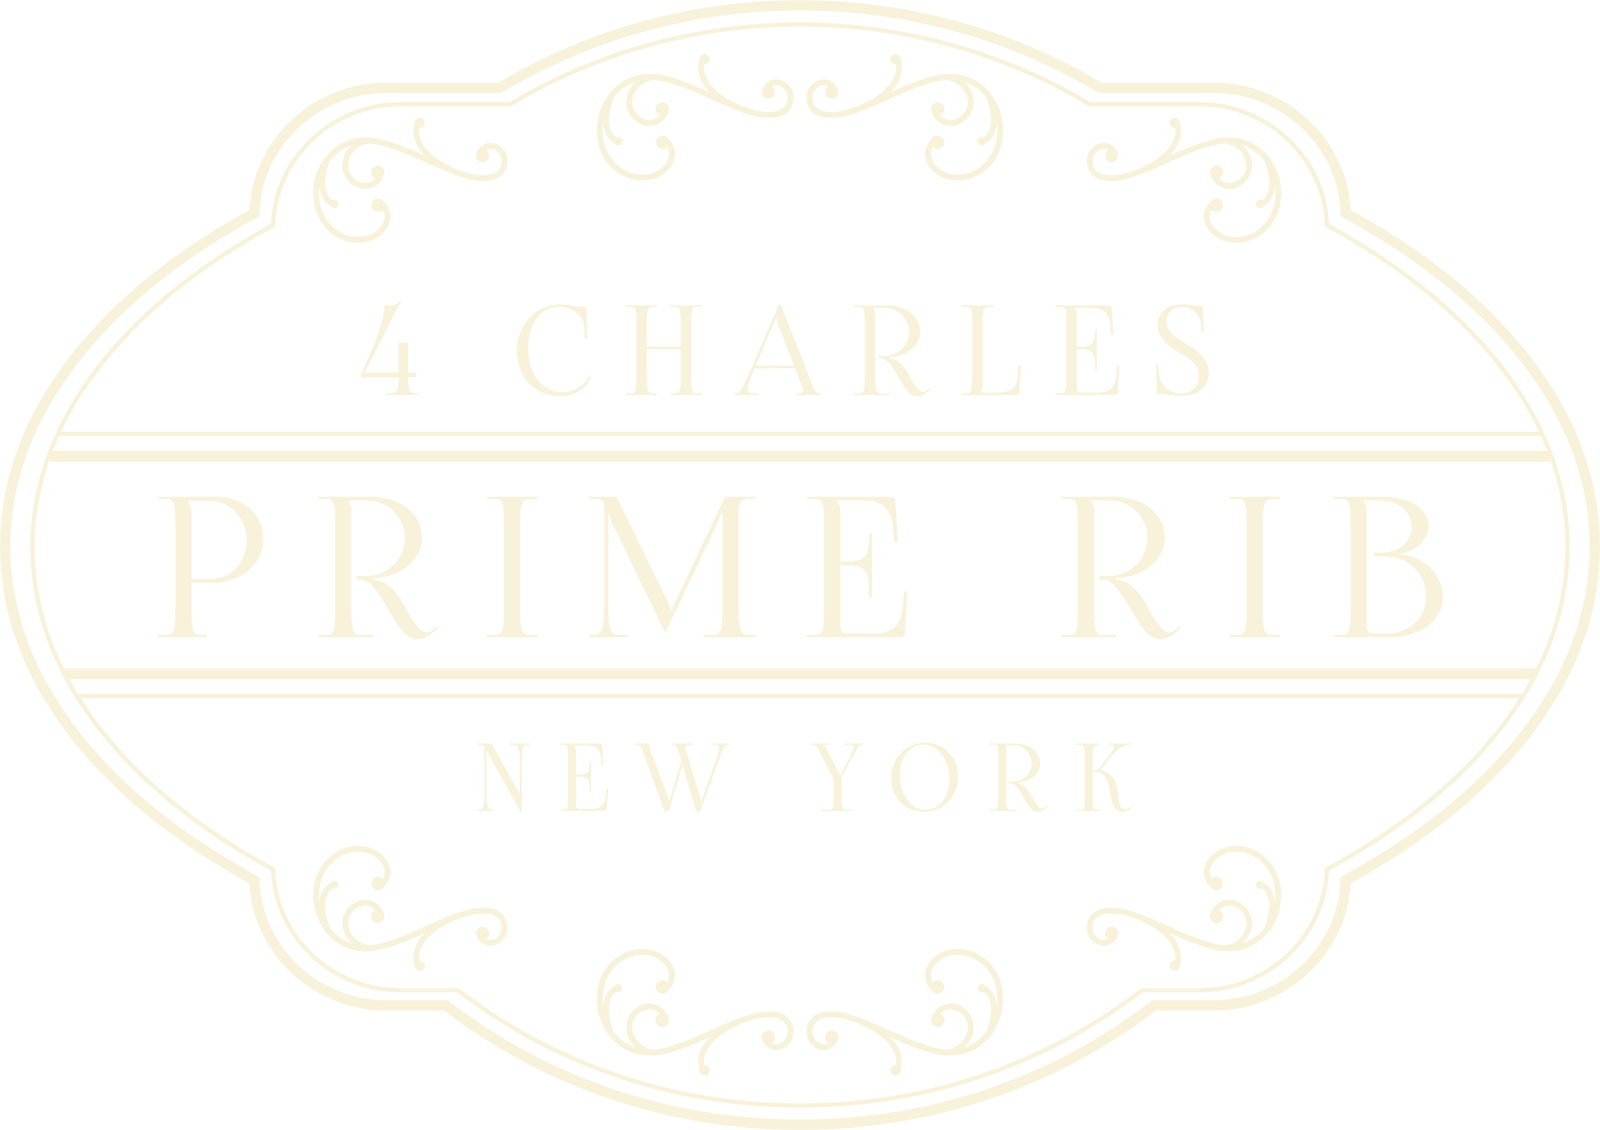 4 Charles Prime Rib